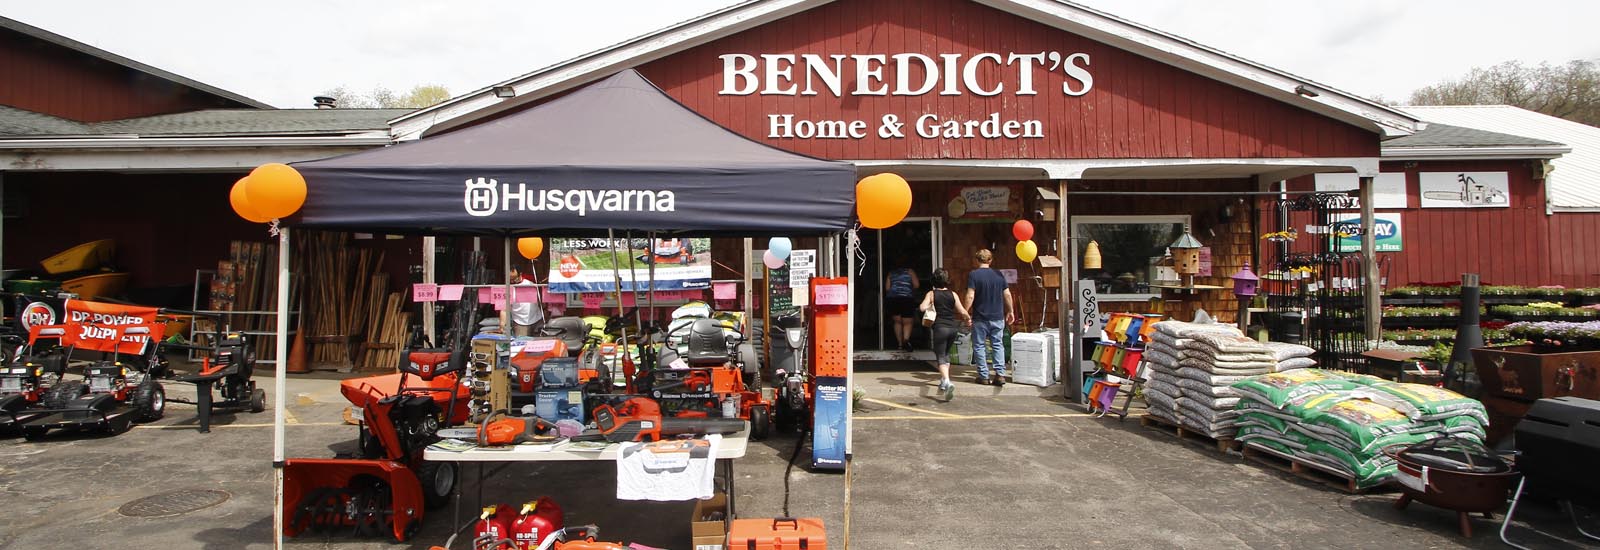 Benedict S Home And Garden